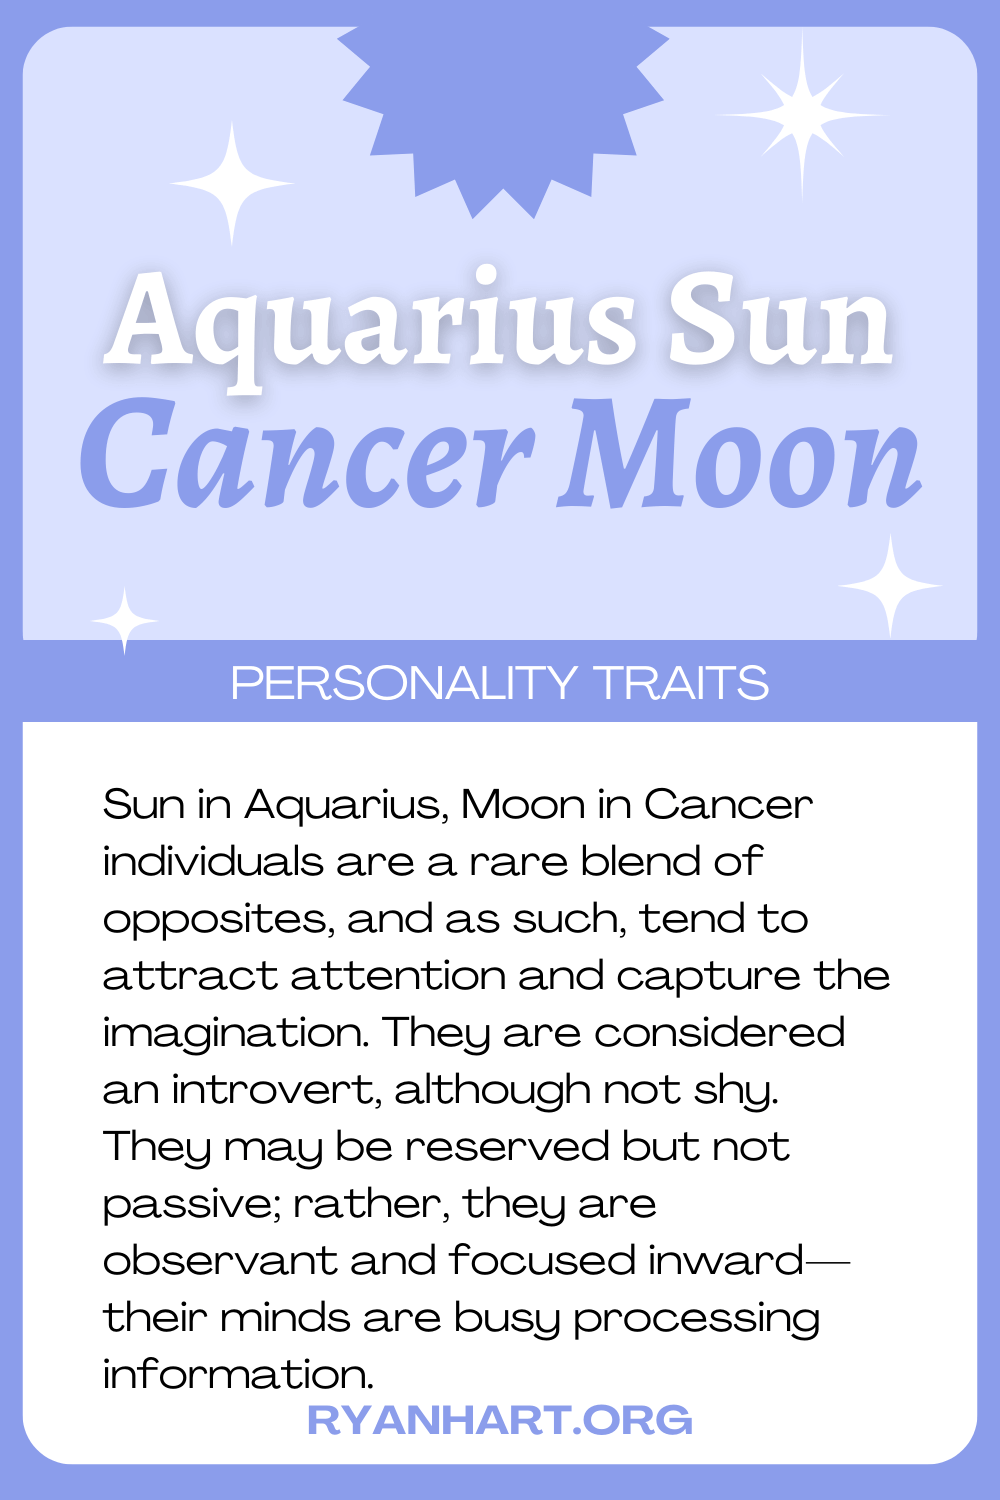 Aquarius Sun Cancer Moon Description